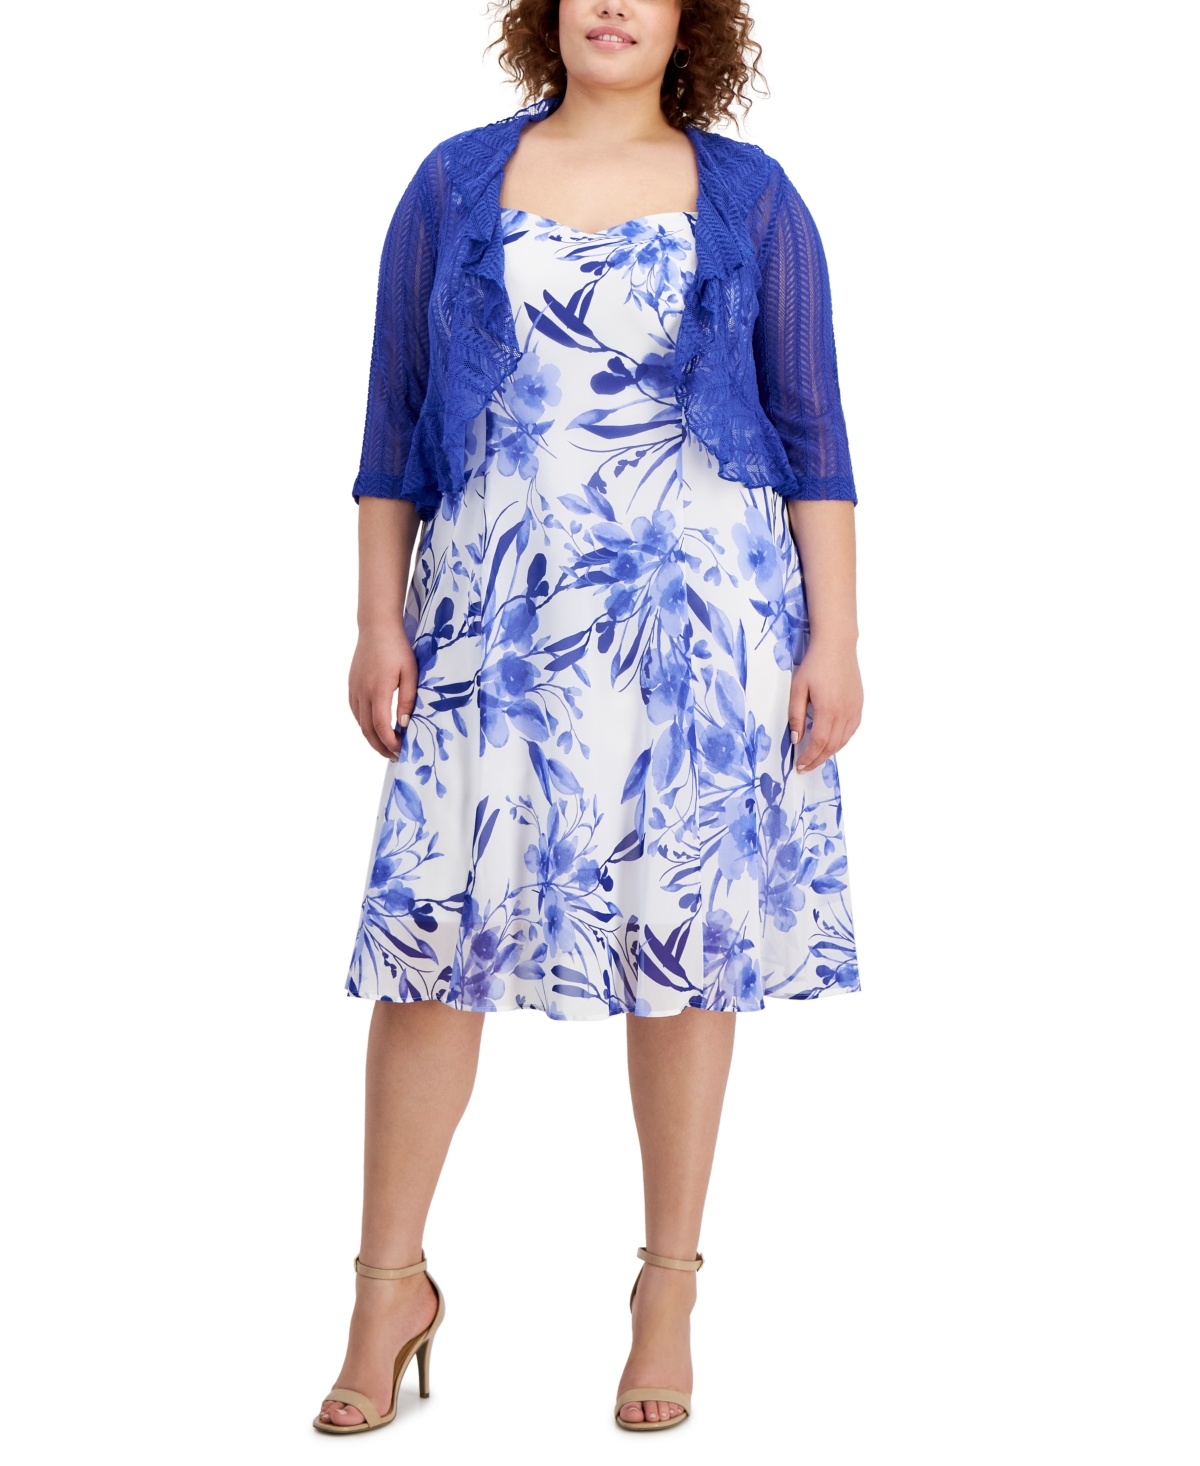 Plus Size Lace Cardigan and Floral-Print Dress - Cobalt